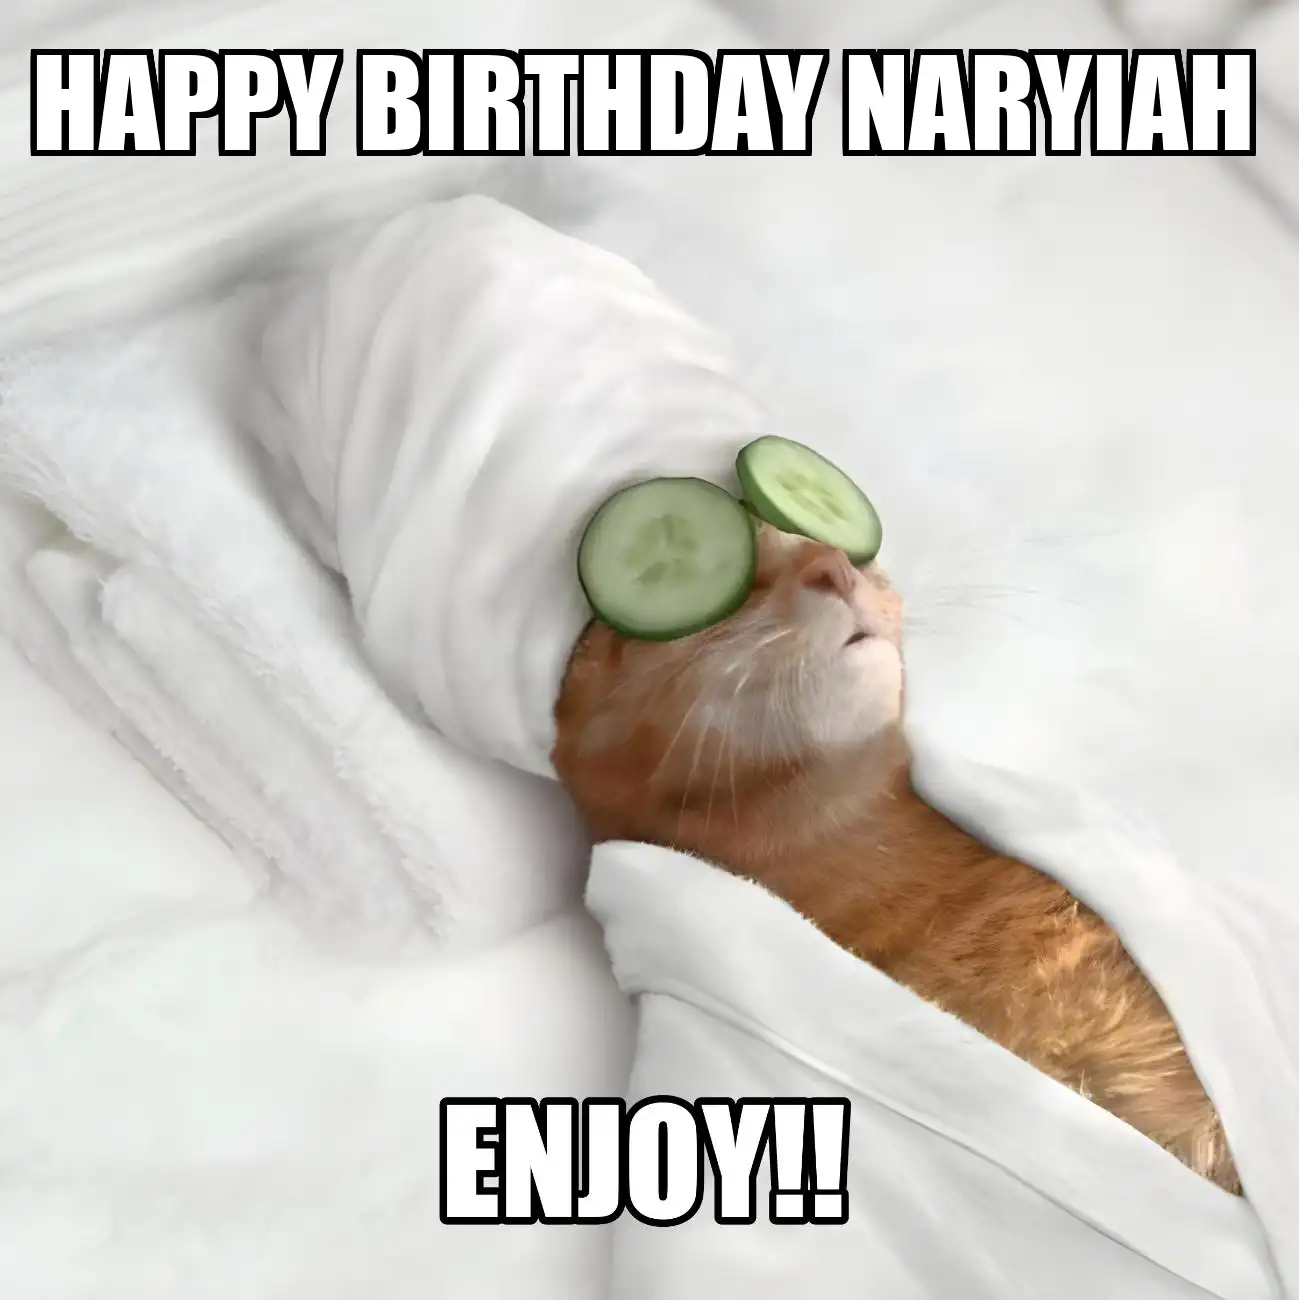 Happy Birthday Naryiah Enjoy Cat Meme